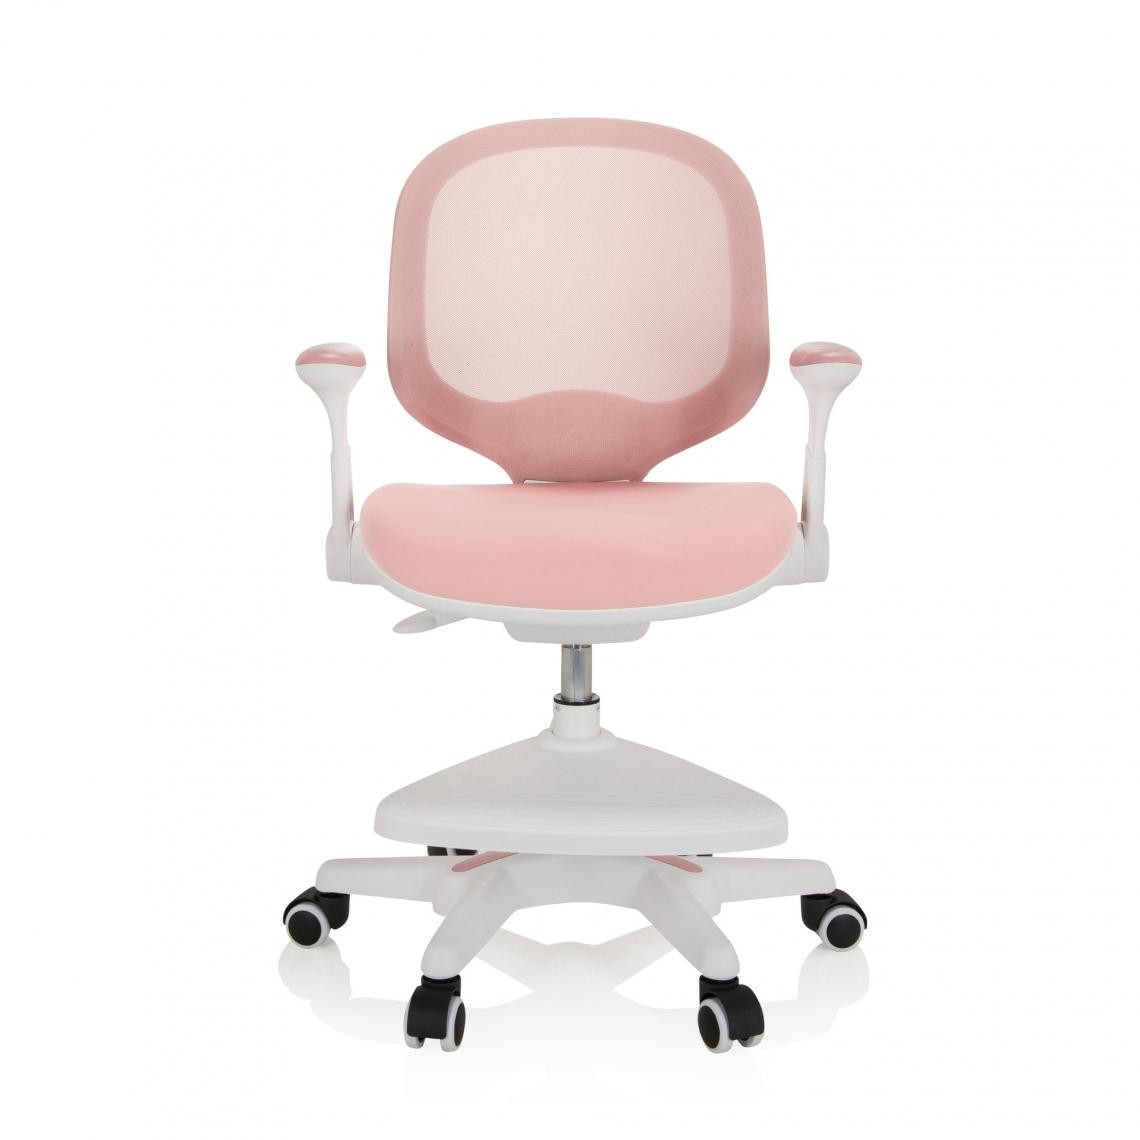 Hjh Office - Chaise de bureau pour enfant KID ERGO Tissu/Tissu maille rose hjh OFFICE - Chaises